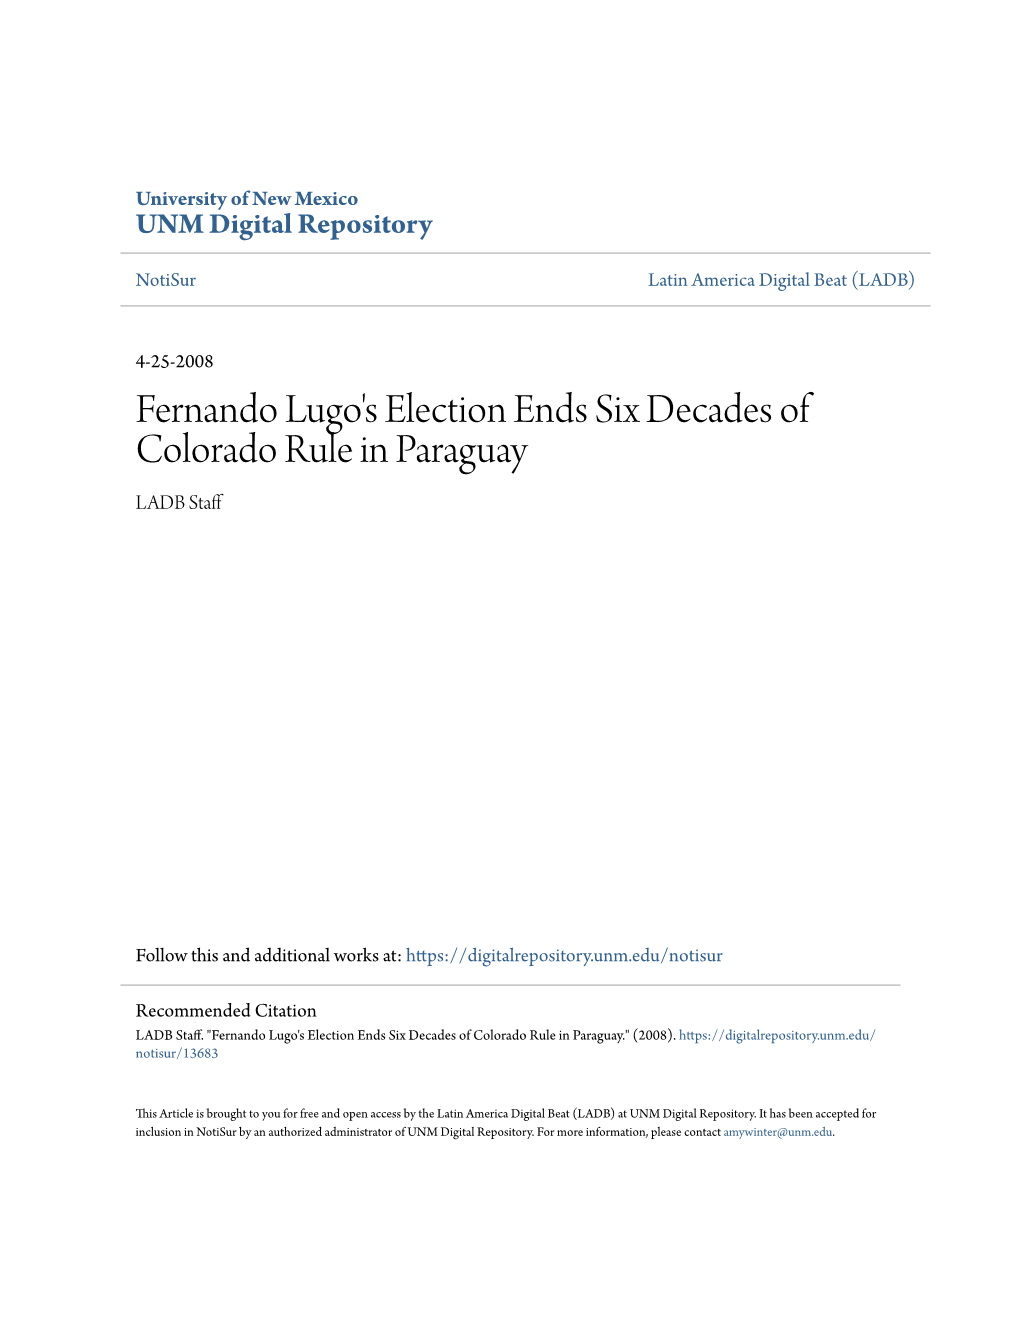 Fernando Lugo's Election Ends Six Decades of Colorado Rule in Paraguay LADB Staff